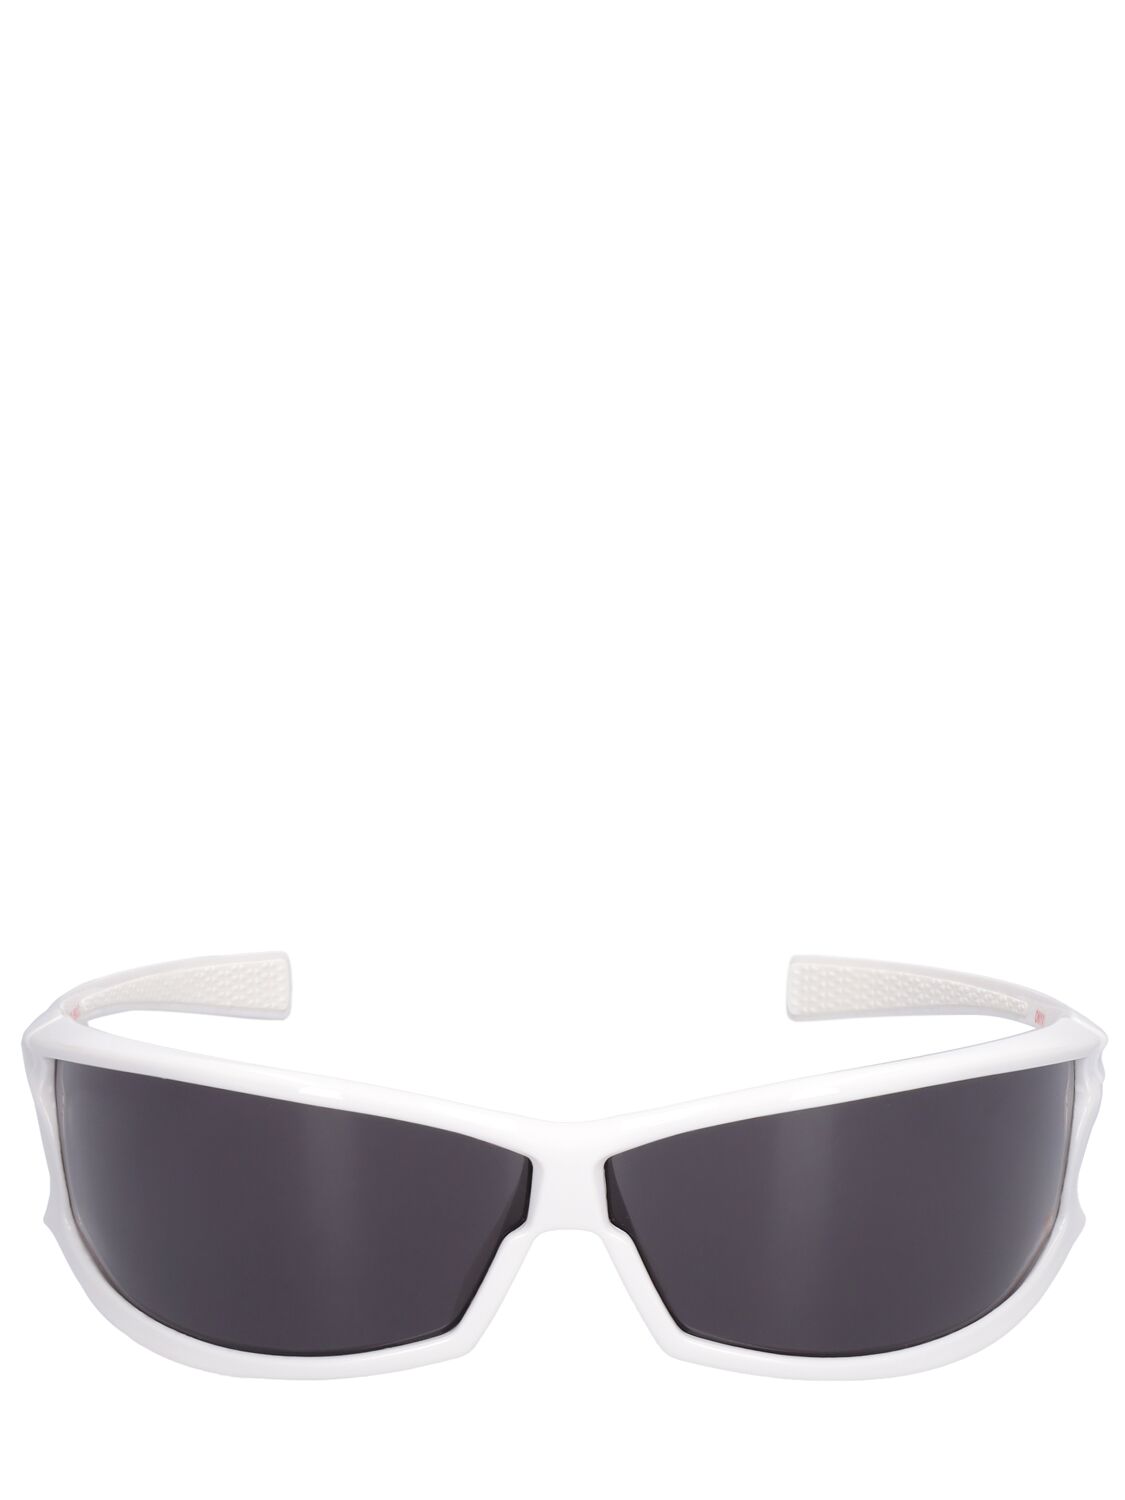 Image of Onyx Bone White Sunglasses